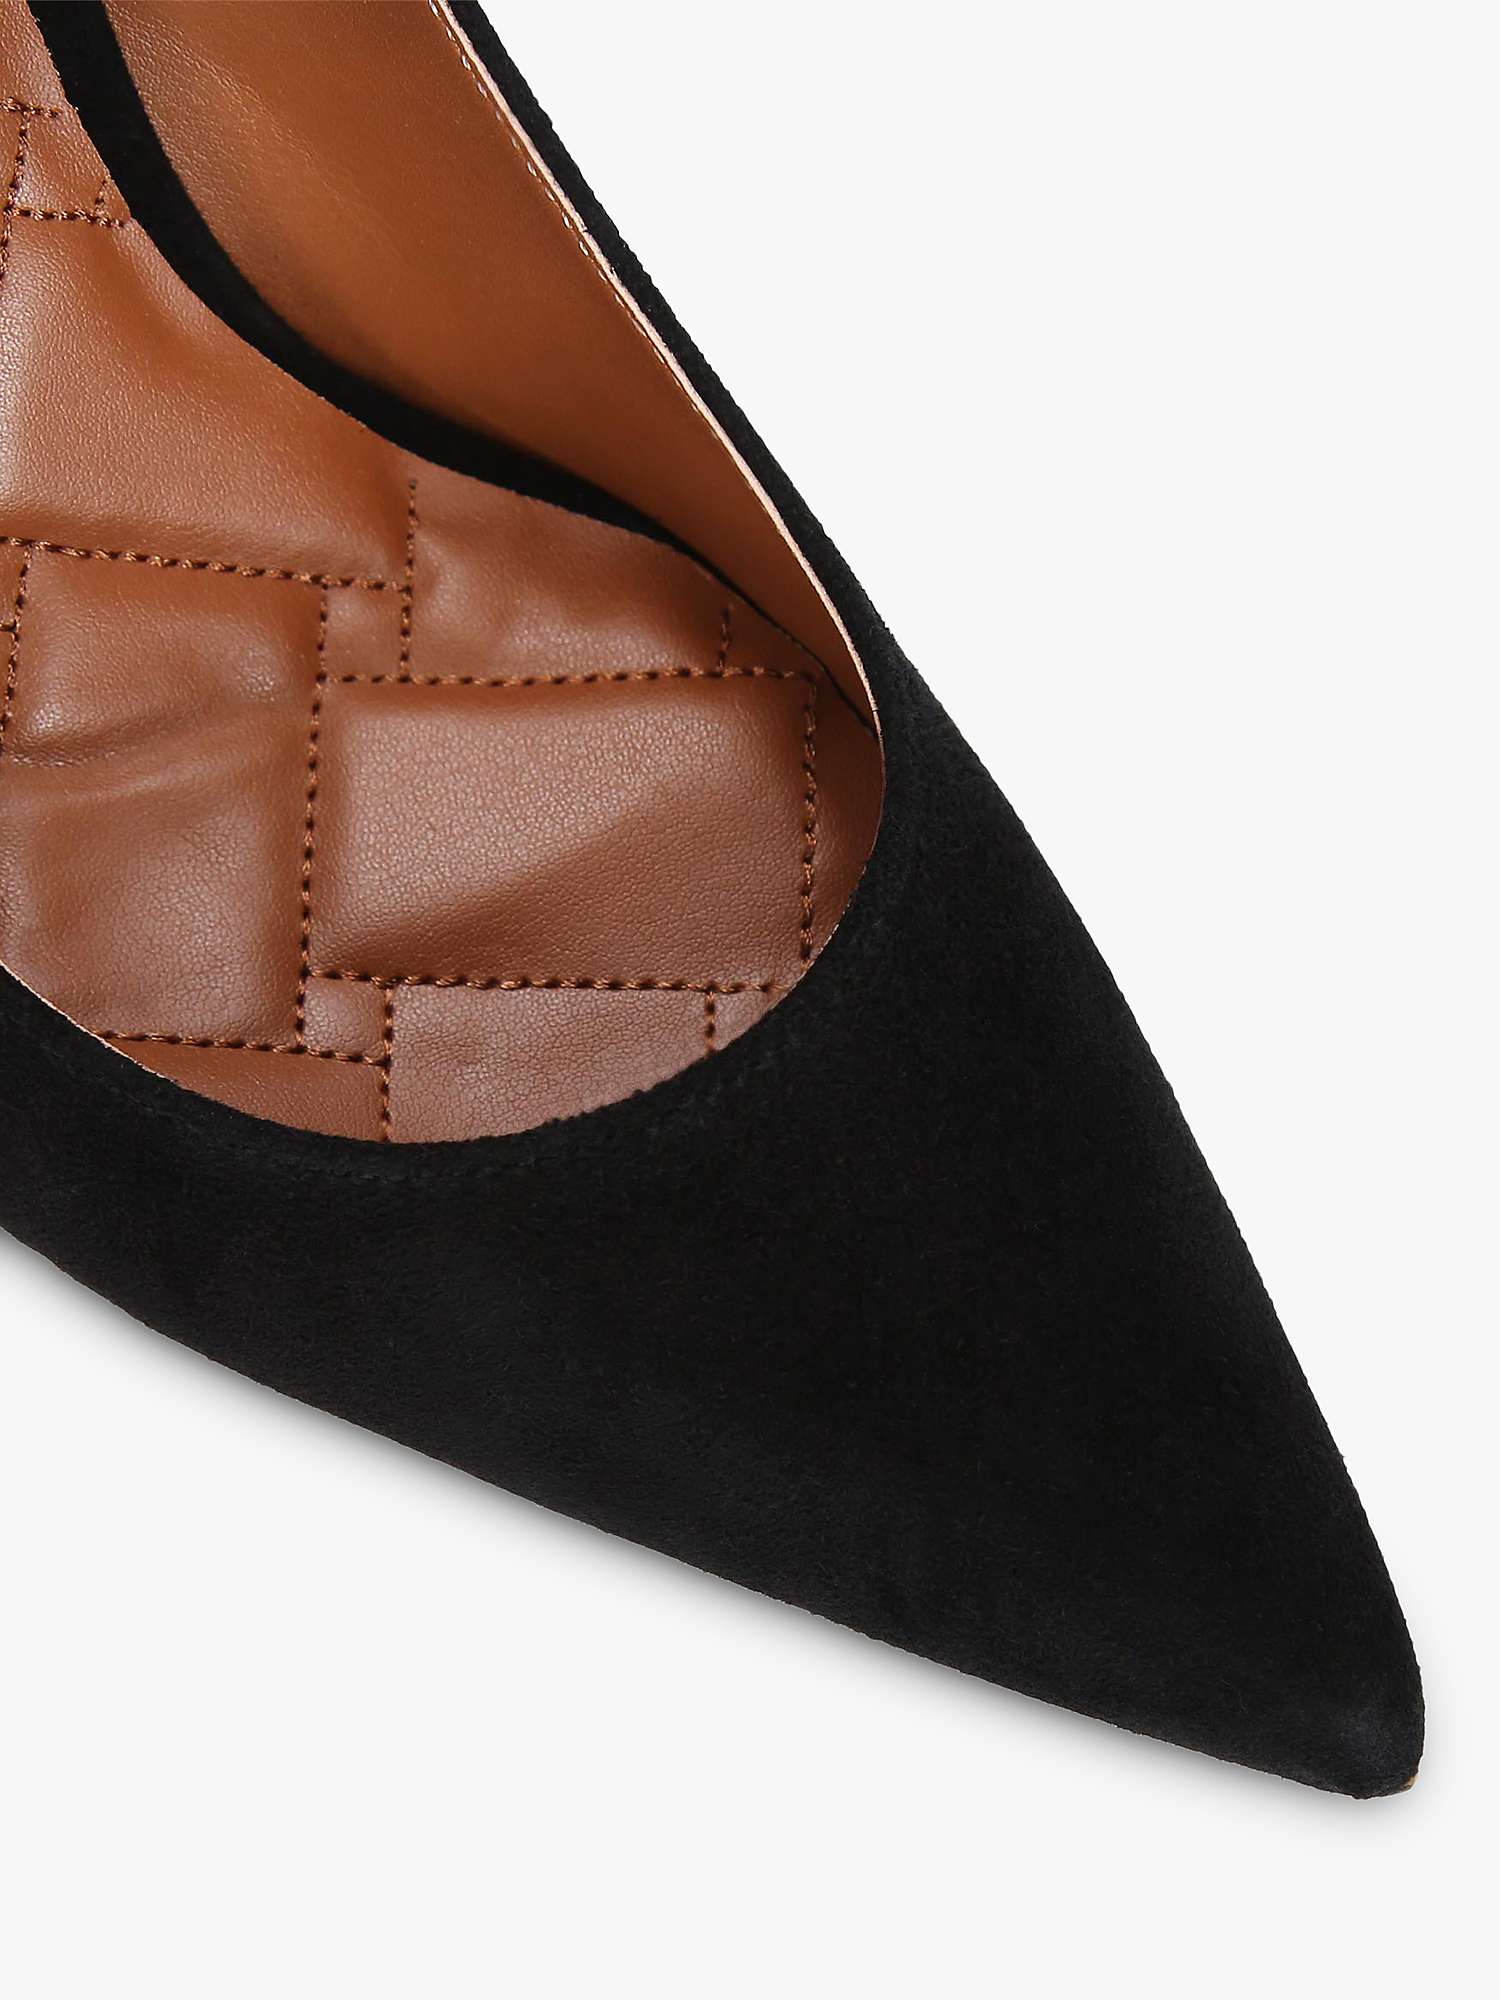 Buy Kurt Geiger London Belgravia Suede Court Shoes, Black Online at johnlewis.com